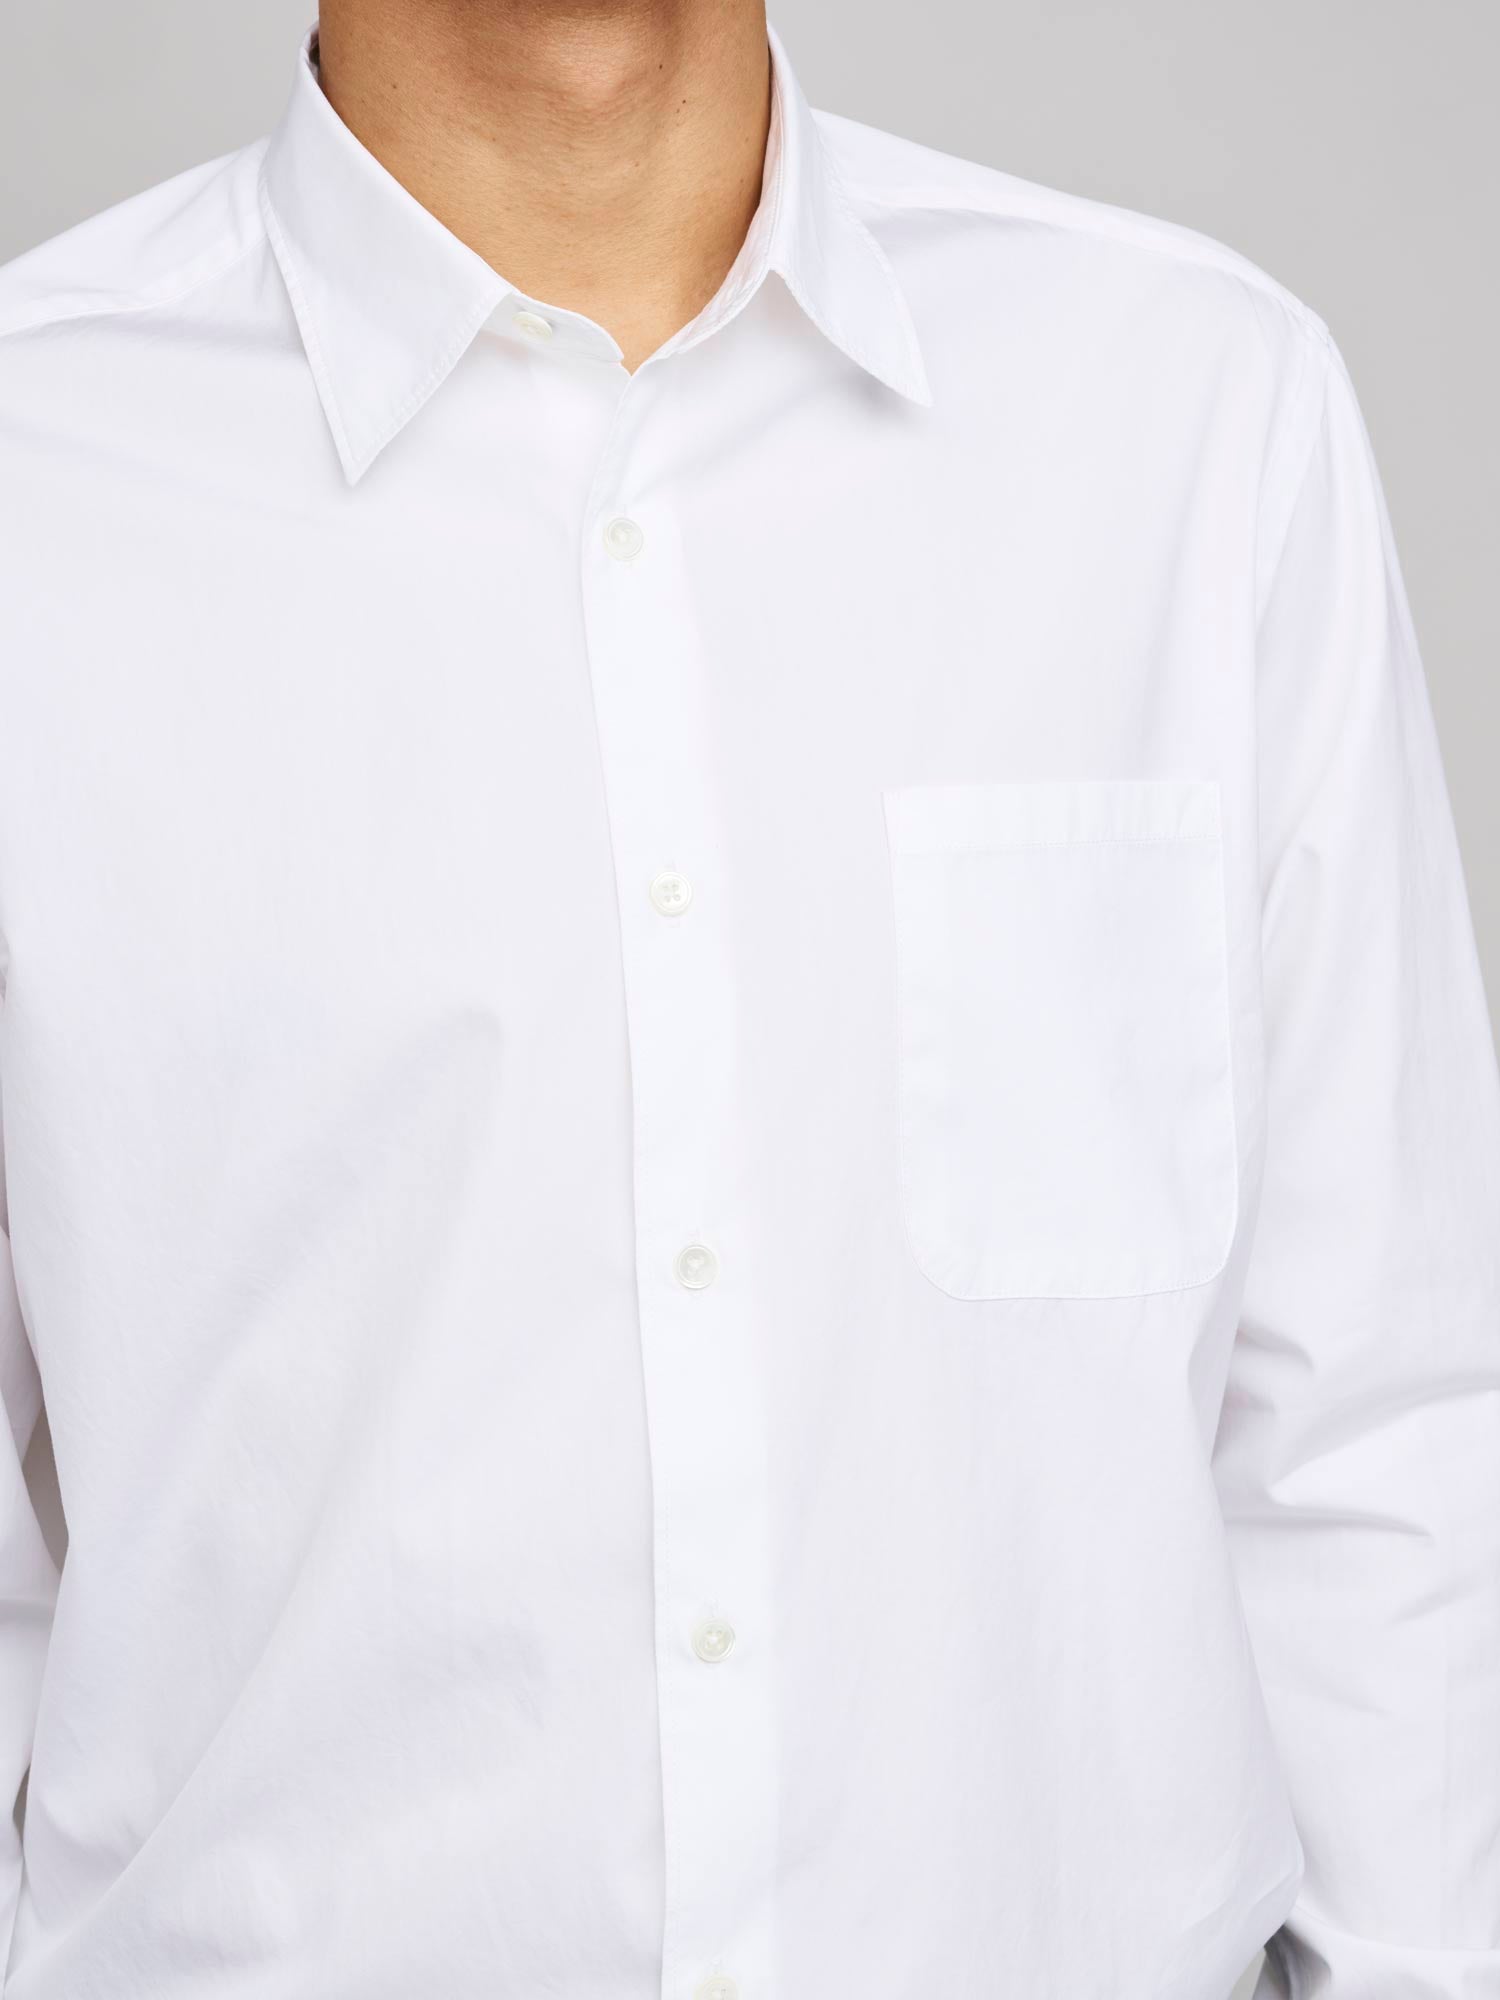 New Standard Shirt, White – Goods